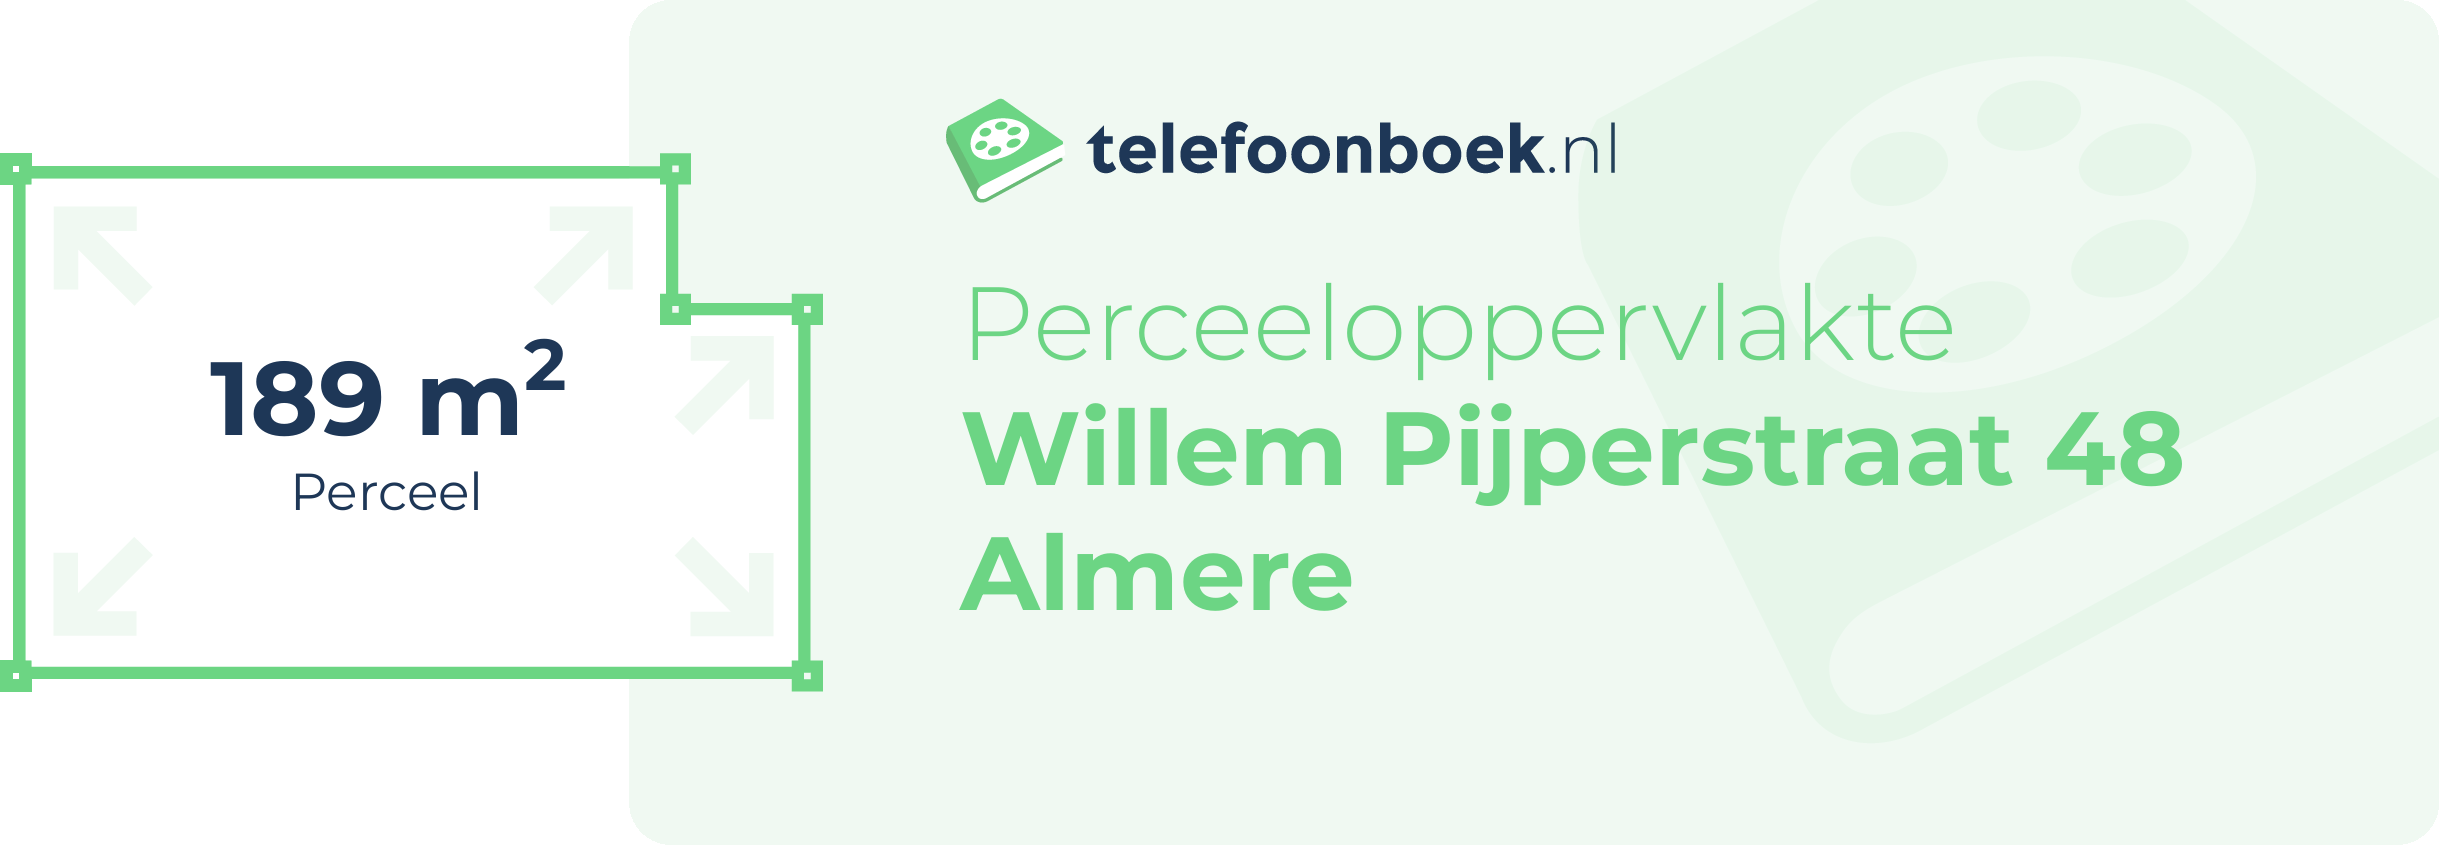 Perceeloppervlakte Willem Pijperstraat 48 Almere